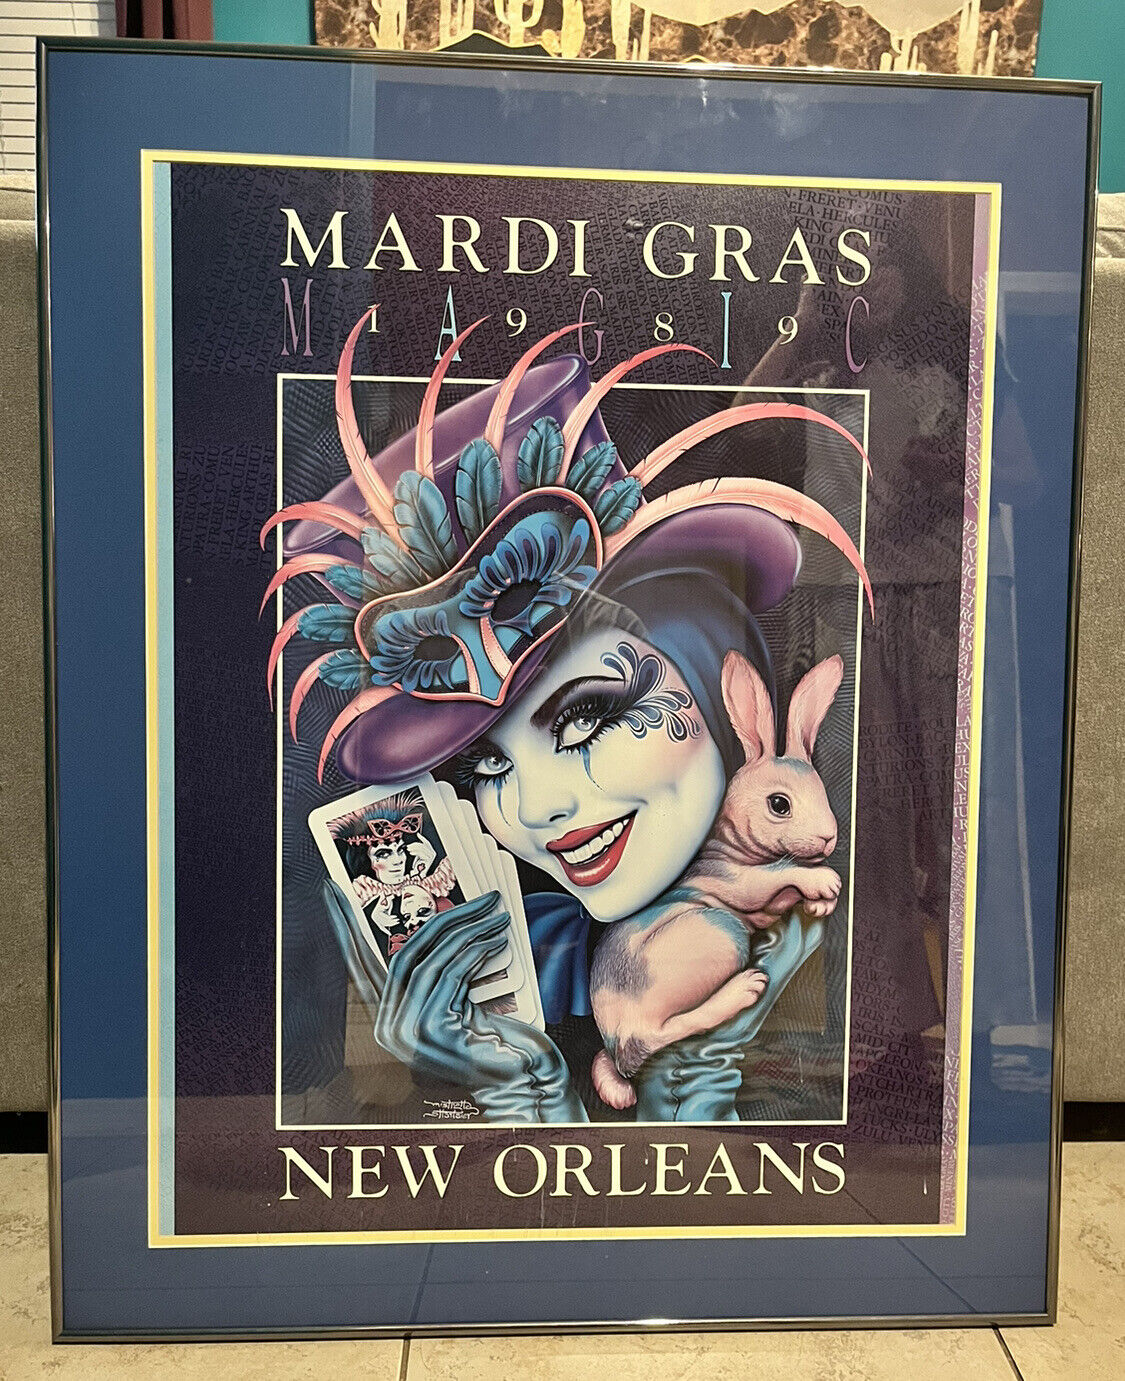 RARE Mardi Gras 1989 New Orleans MAGIC Poster Andrea Mistretta Authenticated OG